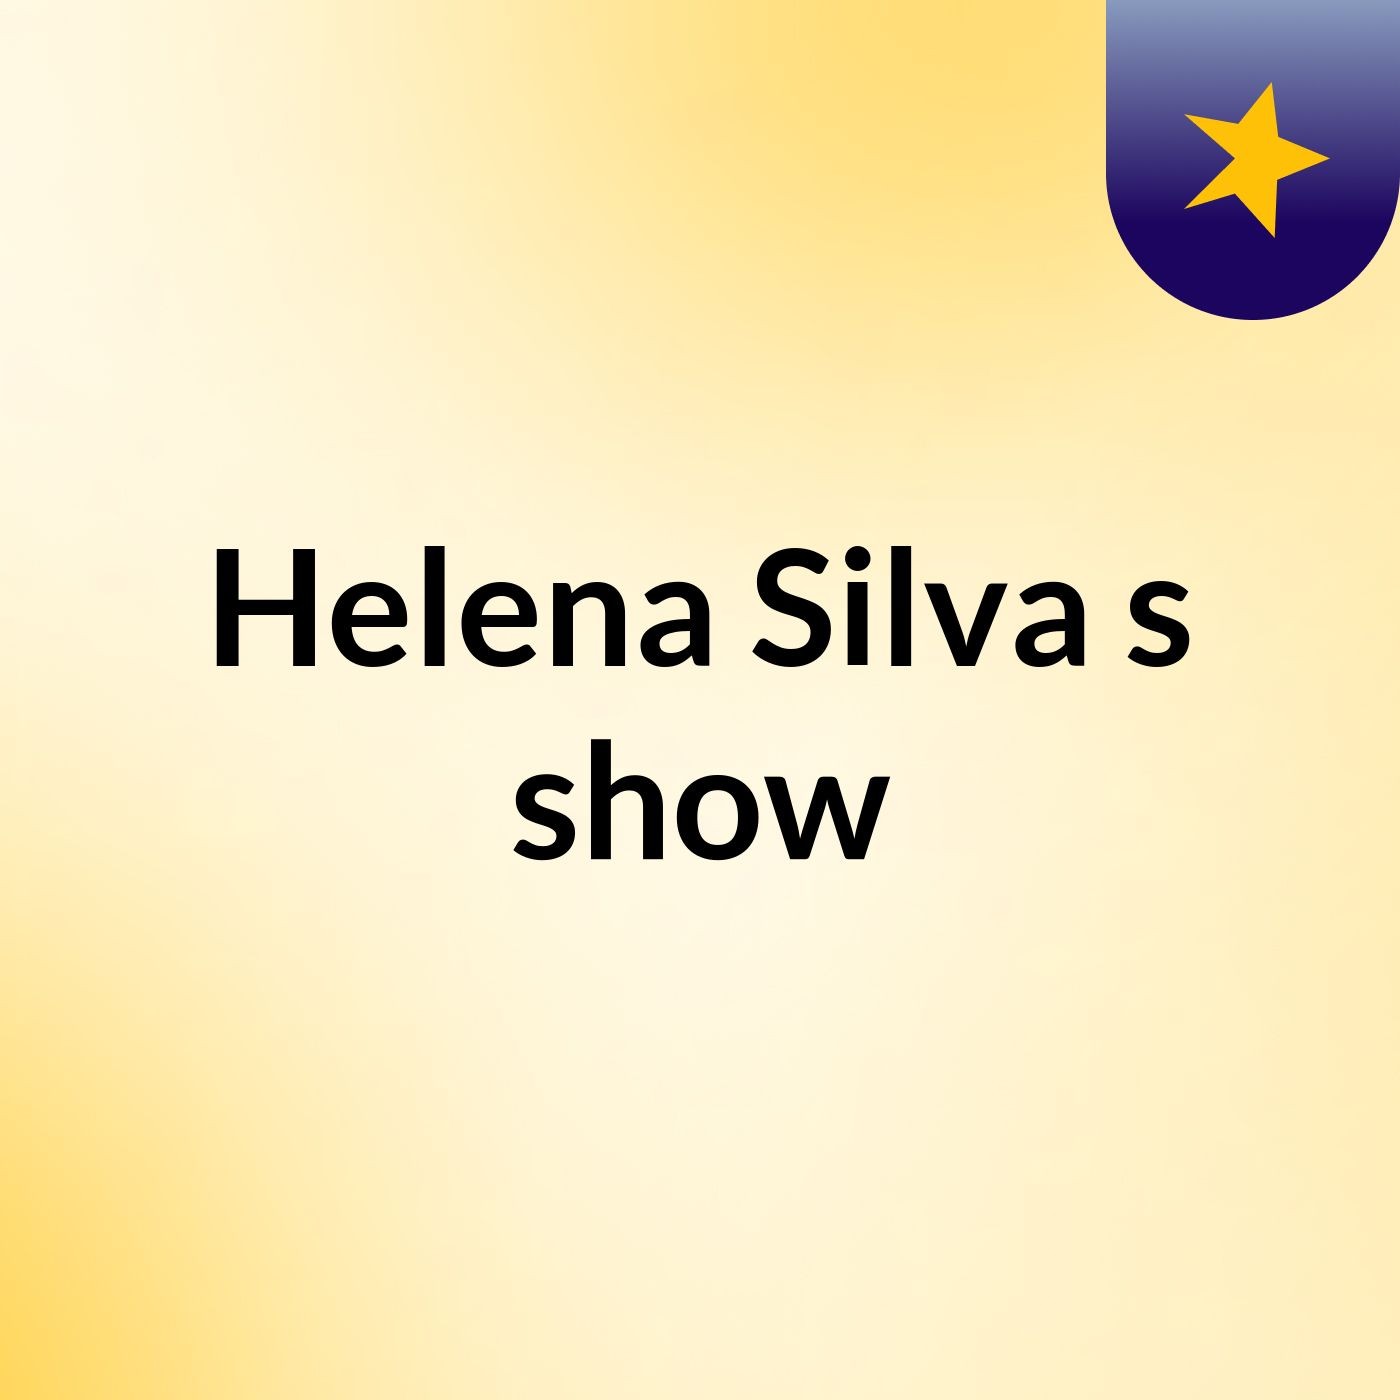 Helena Silva's show